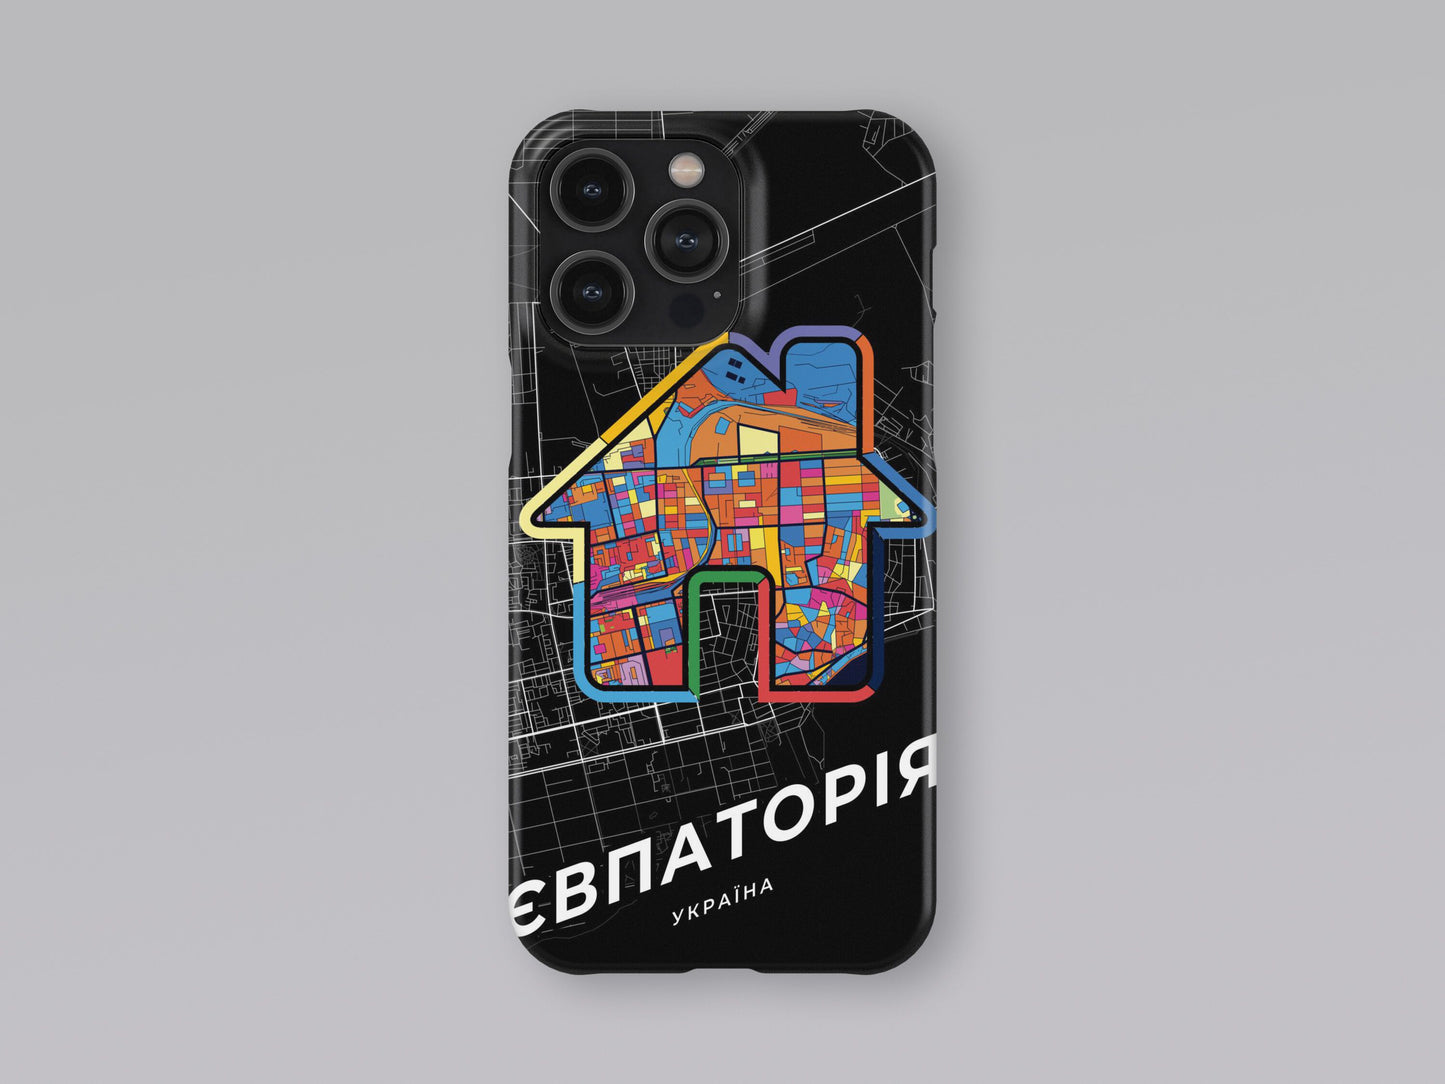 Yevpatoria Ukraine slim phone case with colorful icon 3